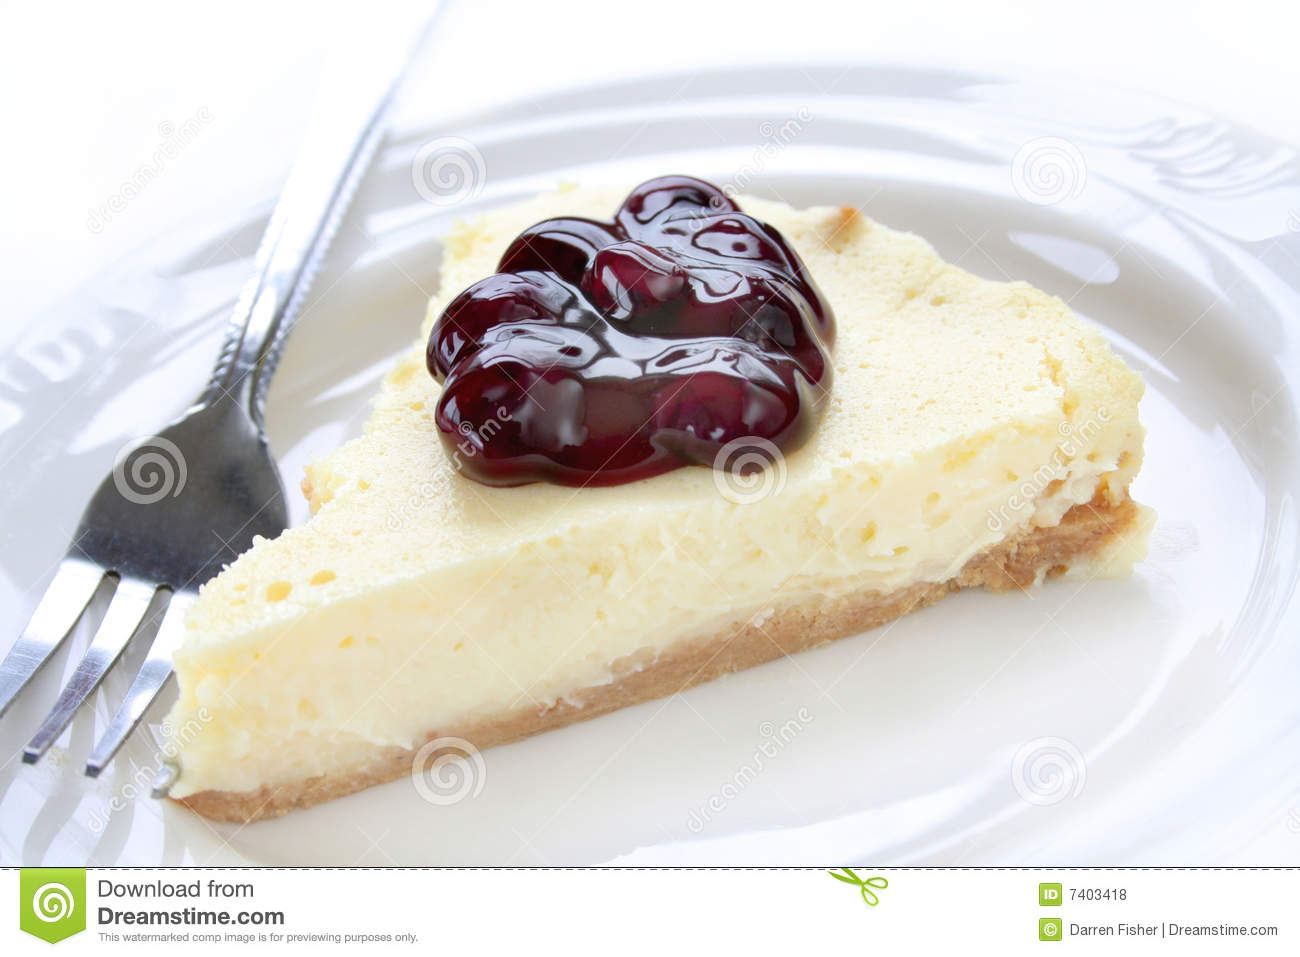 Blueberry Cheesecake Royalty Free Stock Photos   Image  7403418